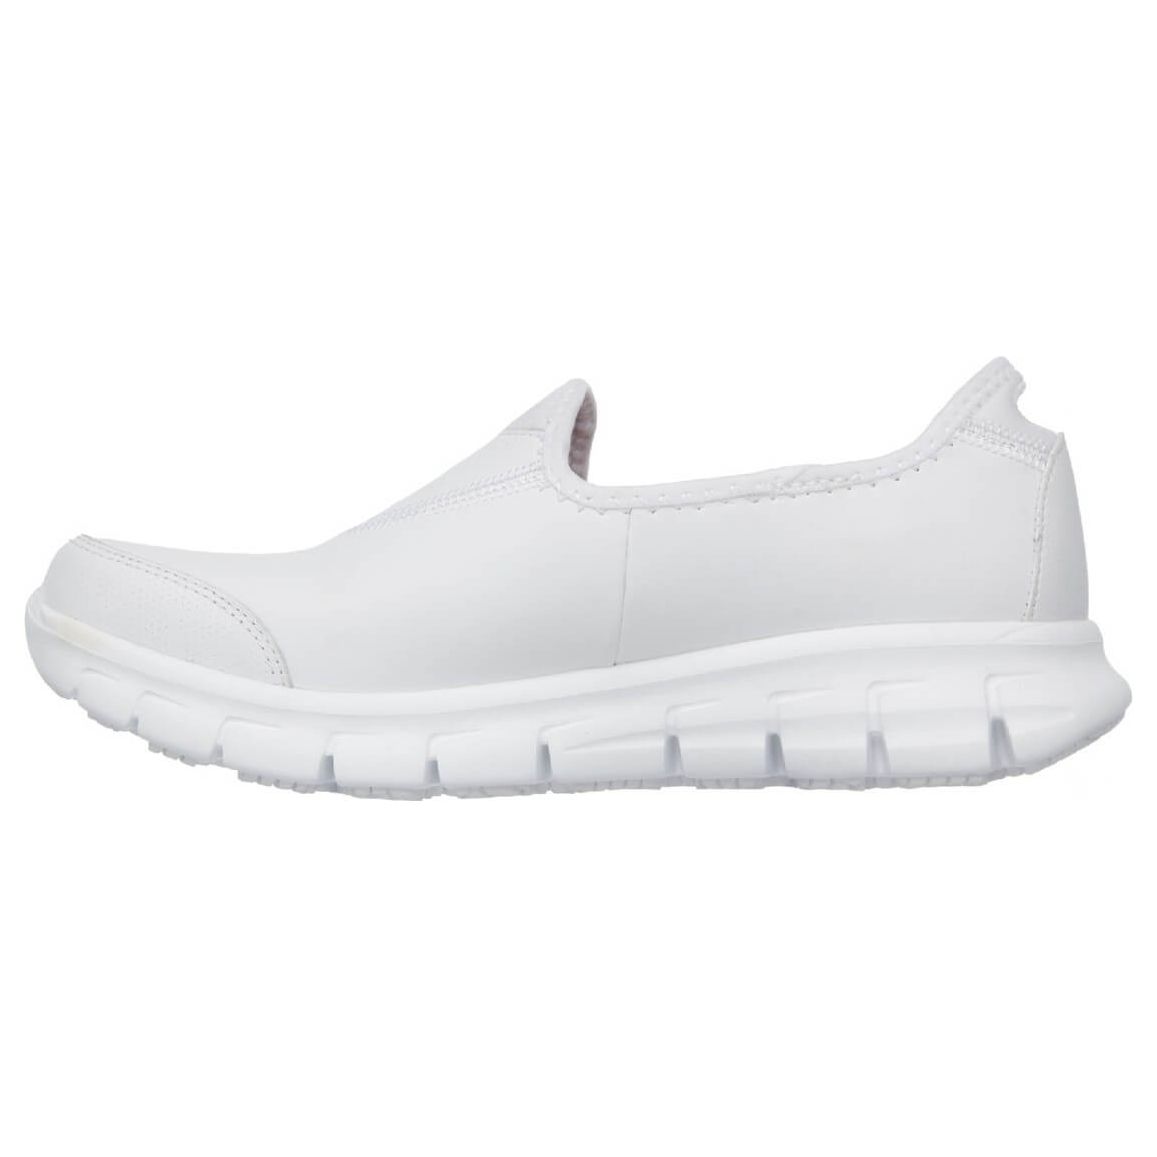 Skechers Sure Track Slip Resistant Work Shoes-White-7